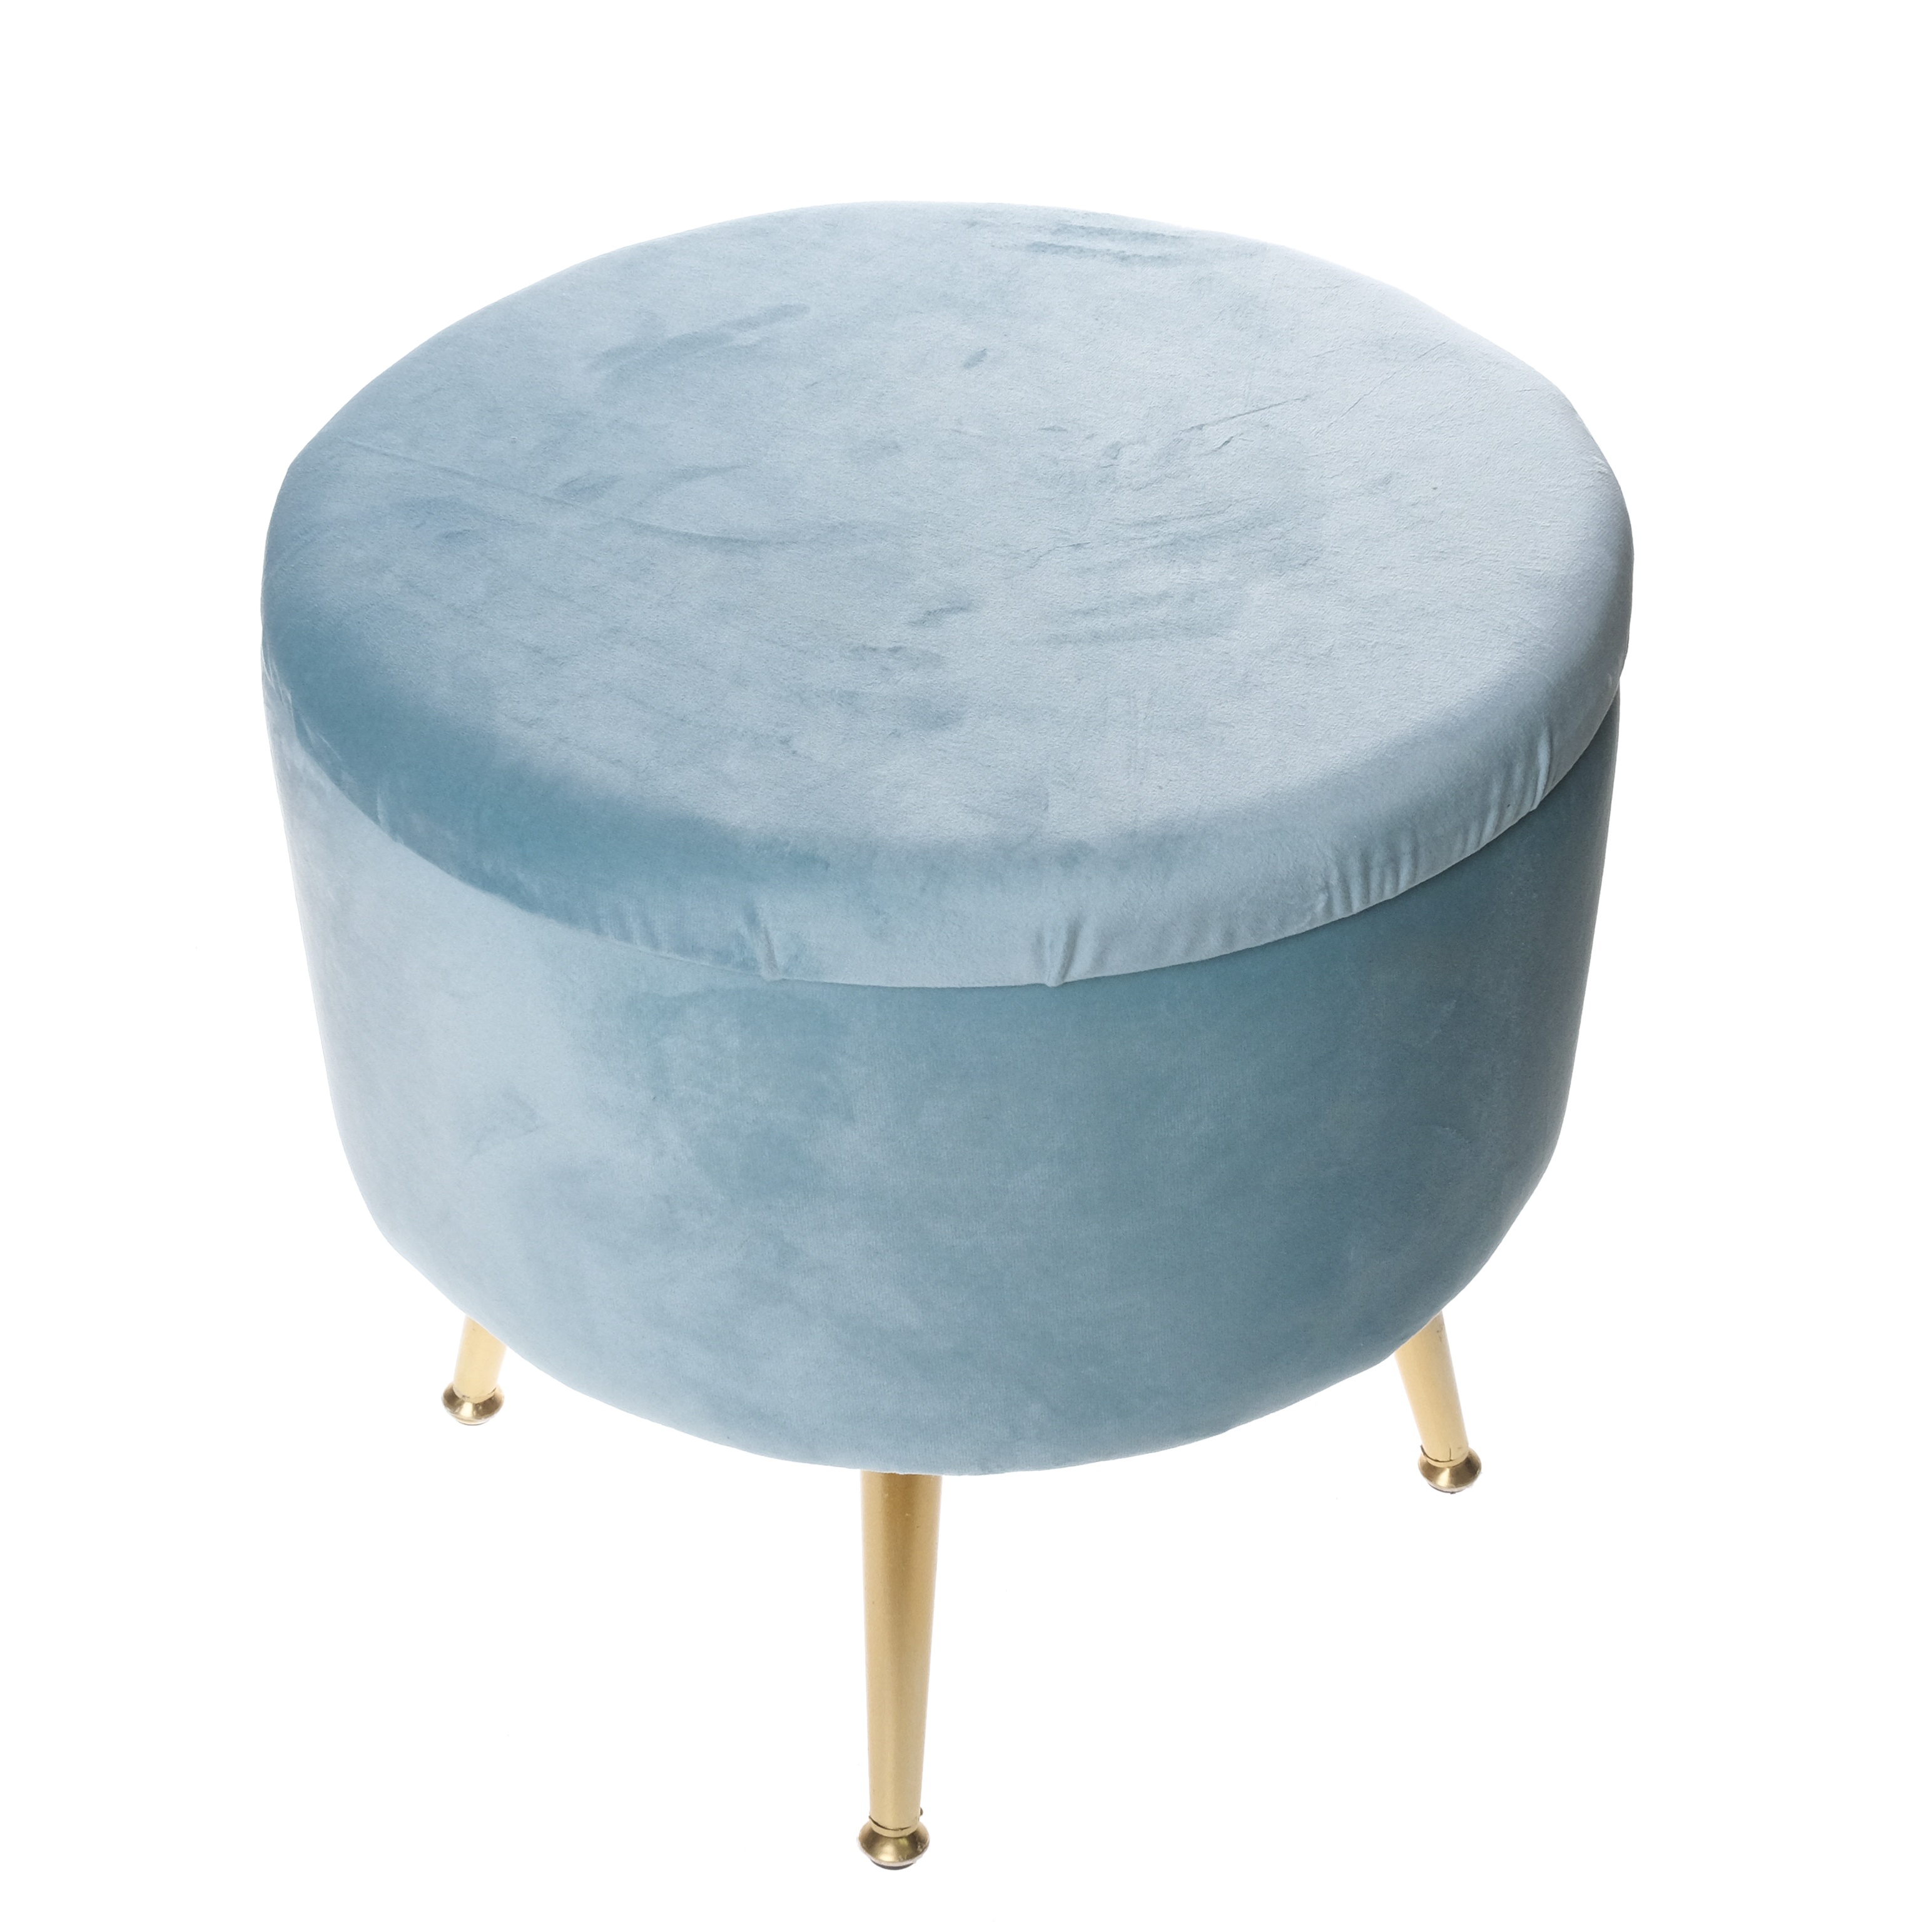 Modern Living Room luxury chair velvet round stool with wood legs